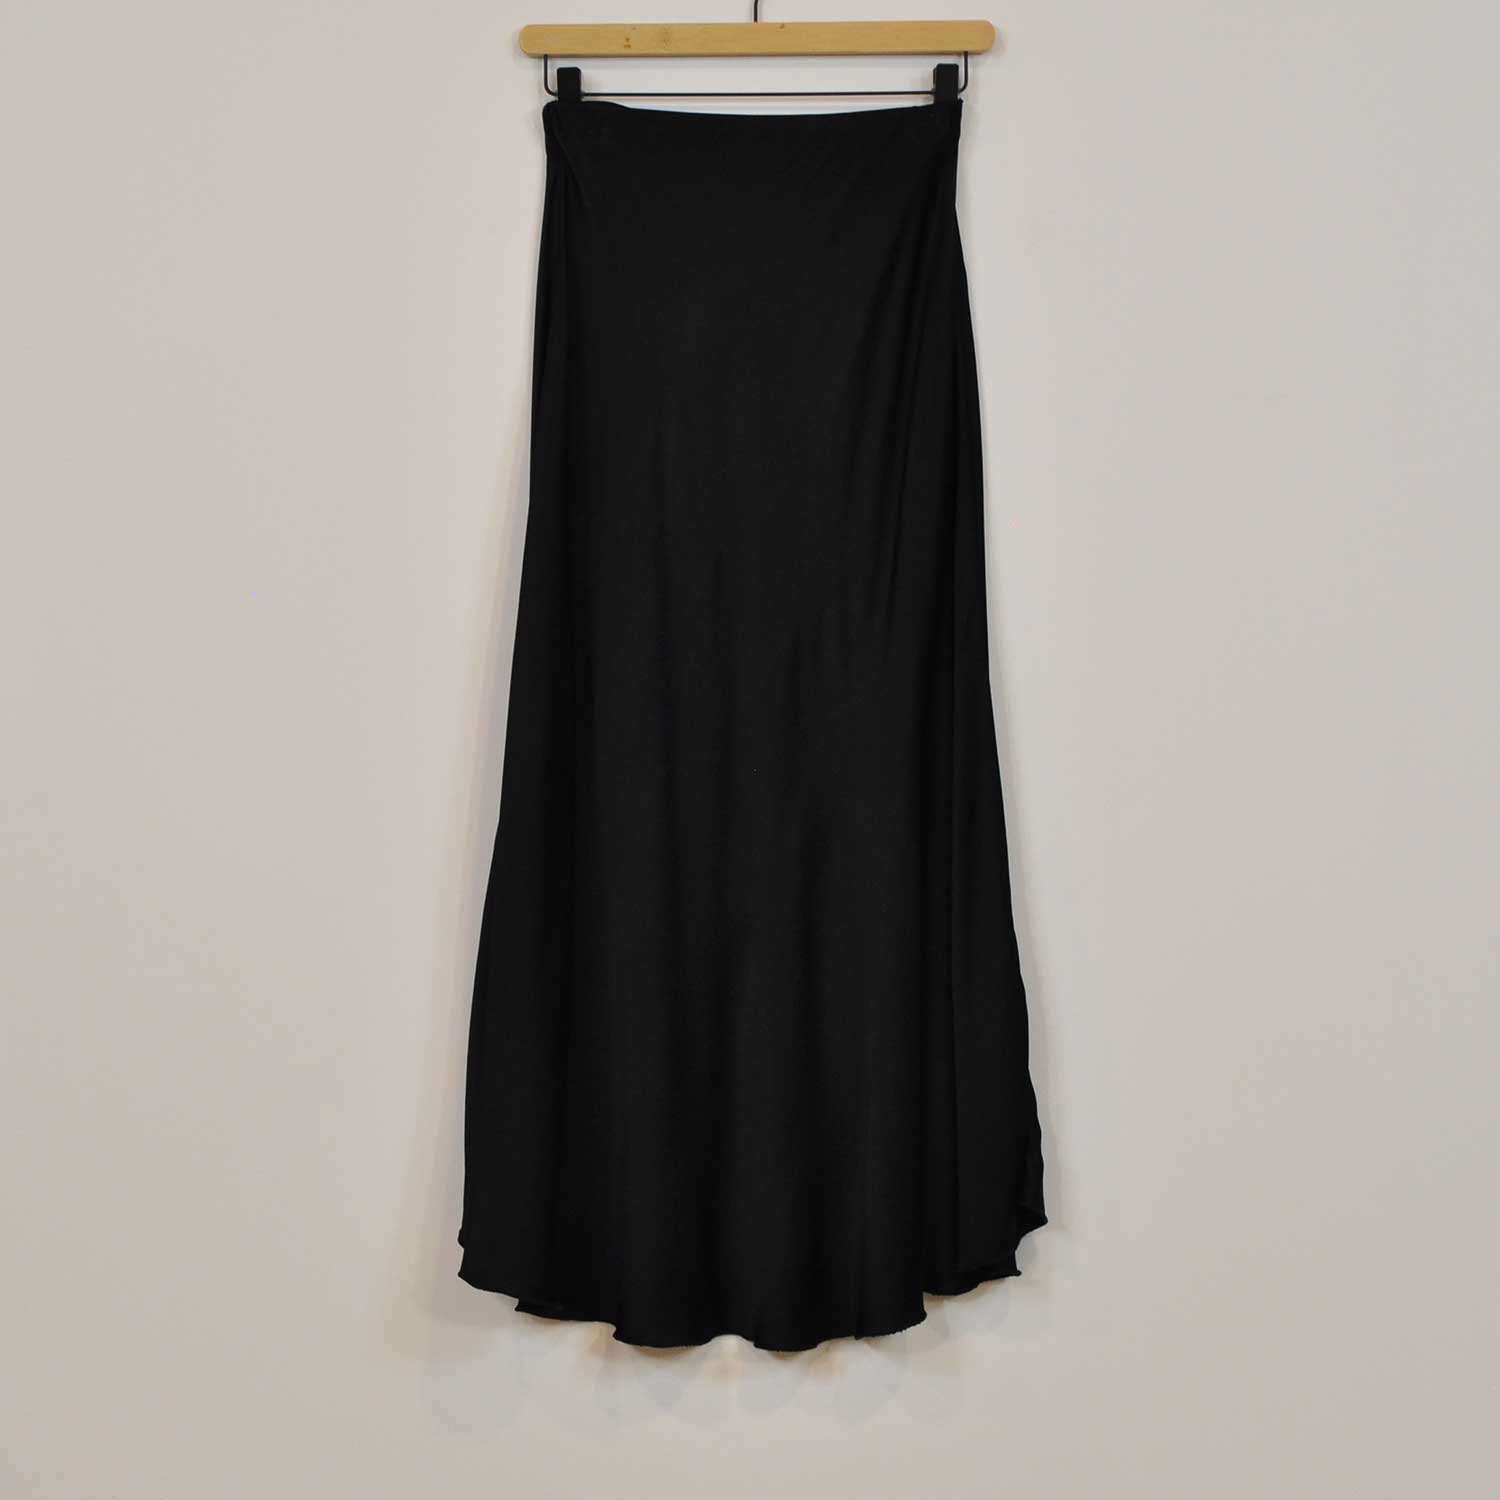 Black satin midi skirt